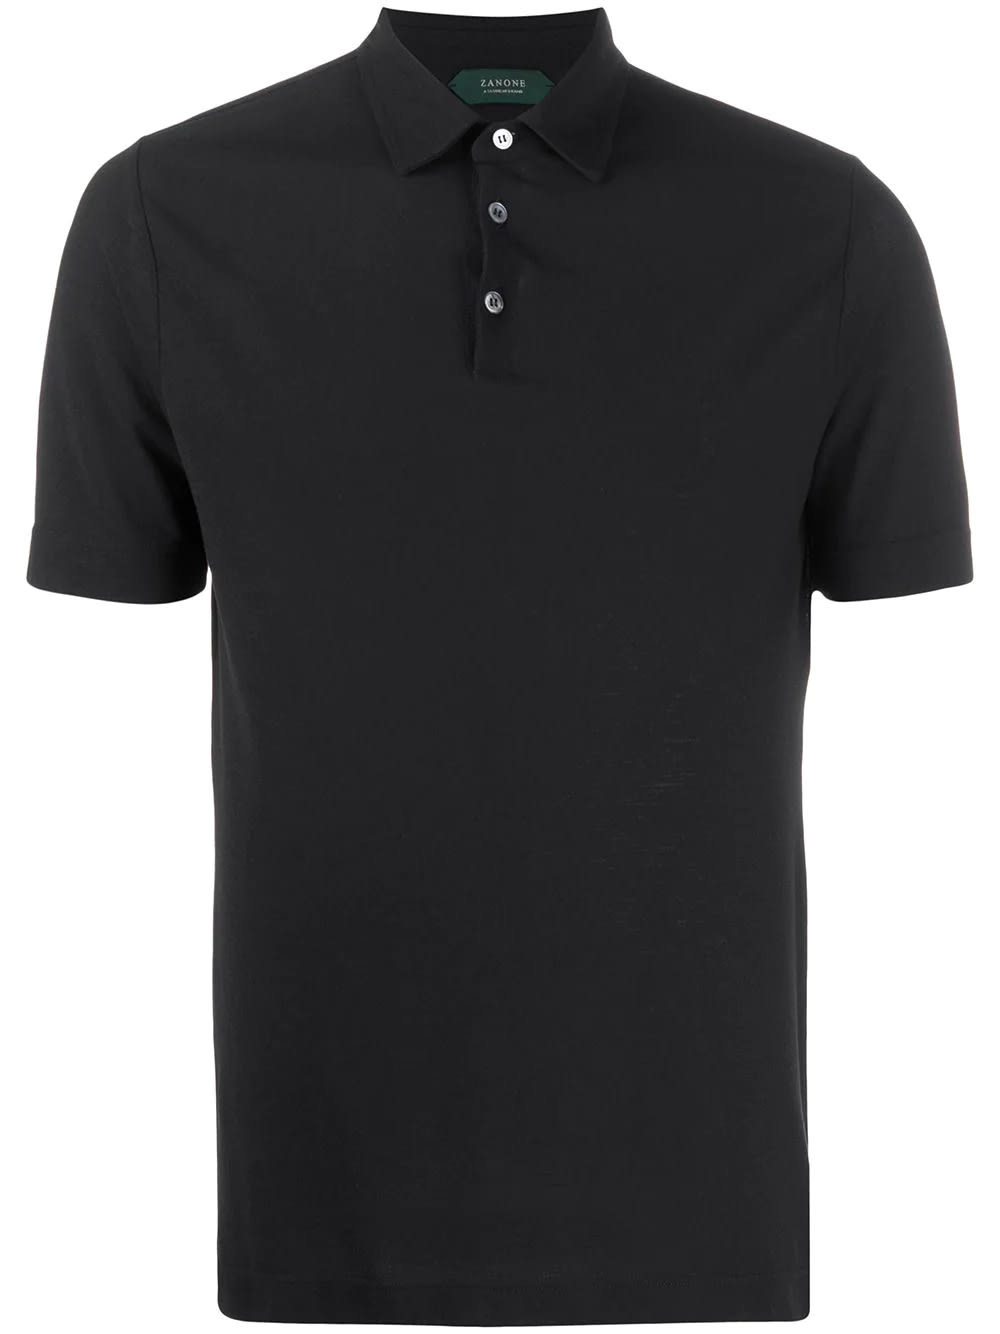 Zanone Man Black Icecotton Slim Fit Short Sleeve Polo Shirt